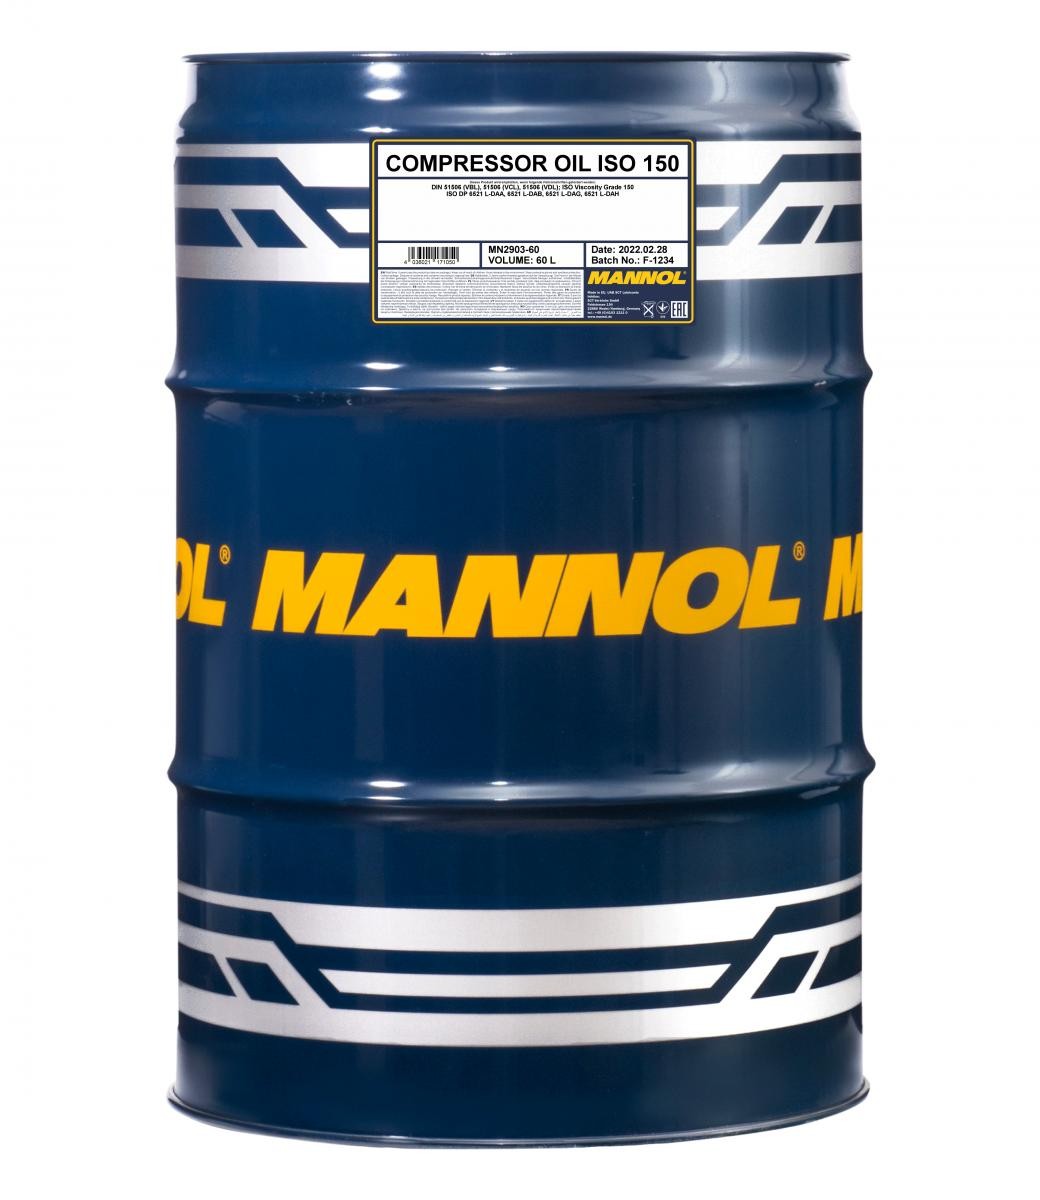 Aircon pump MANNOL Compressor Oil ISO 150 Mineral Oil - MN2903-60